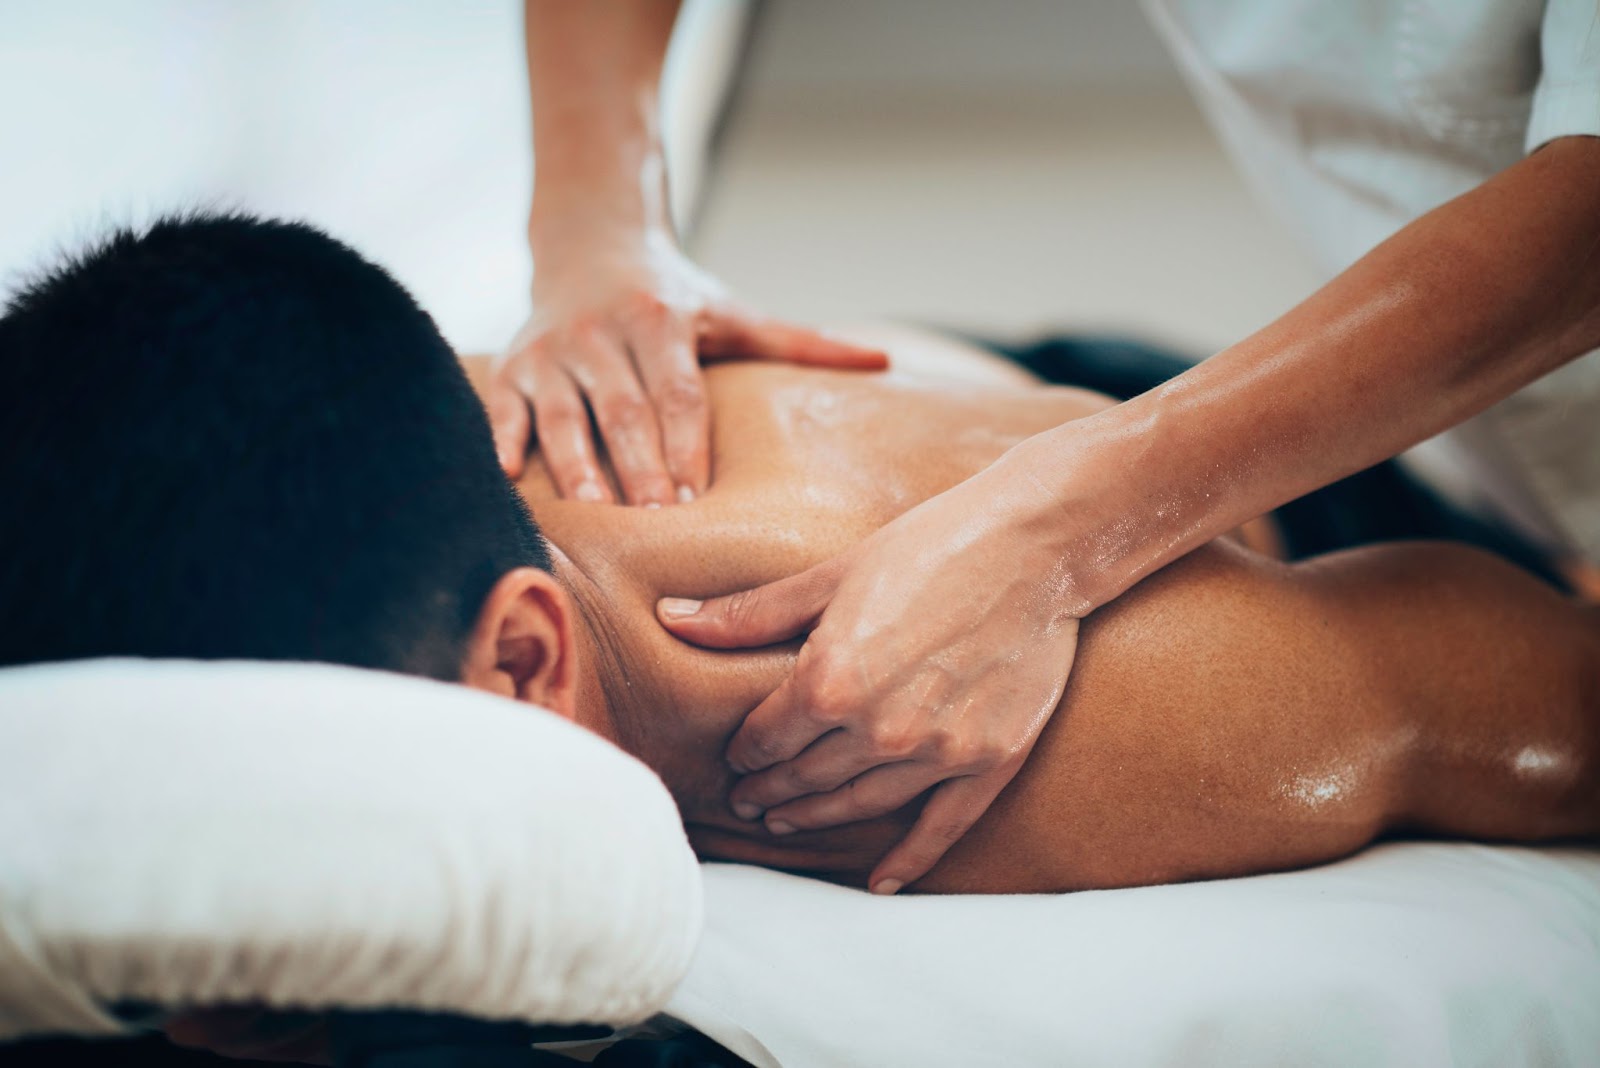 A man getting a massage.